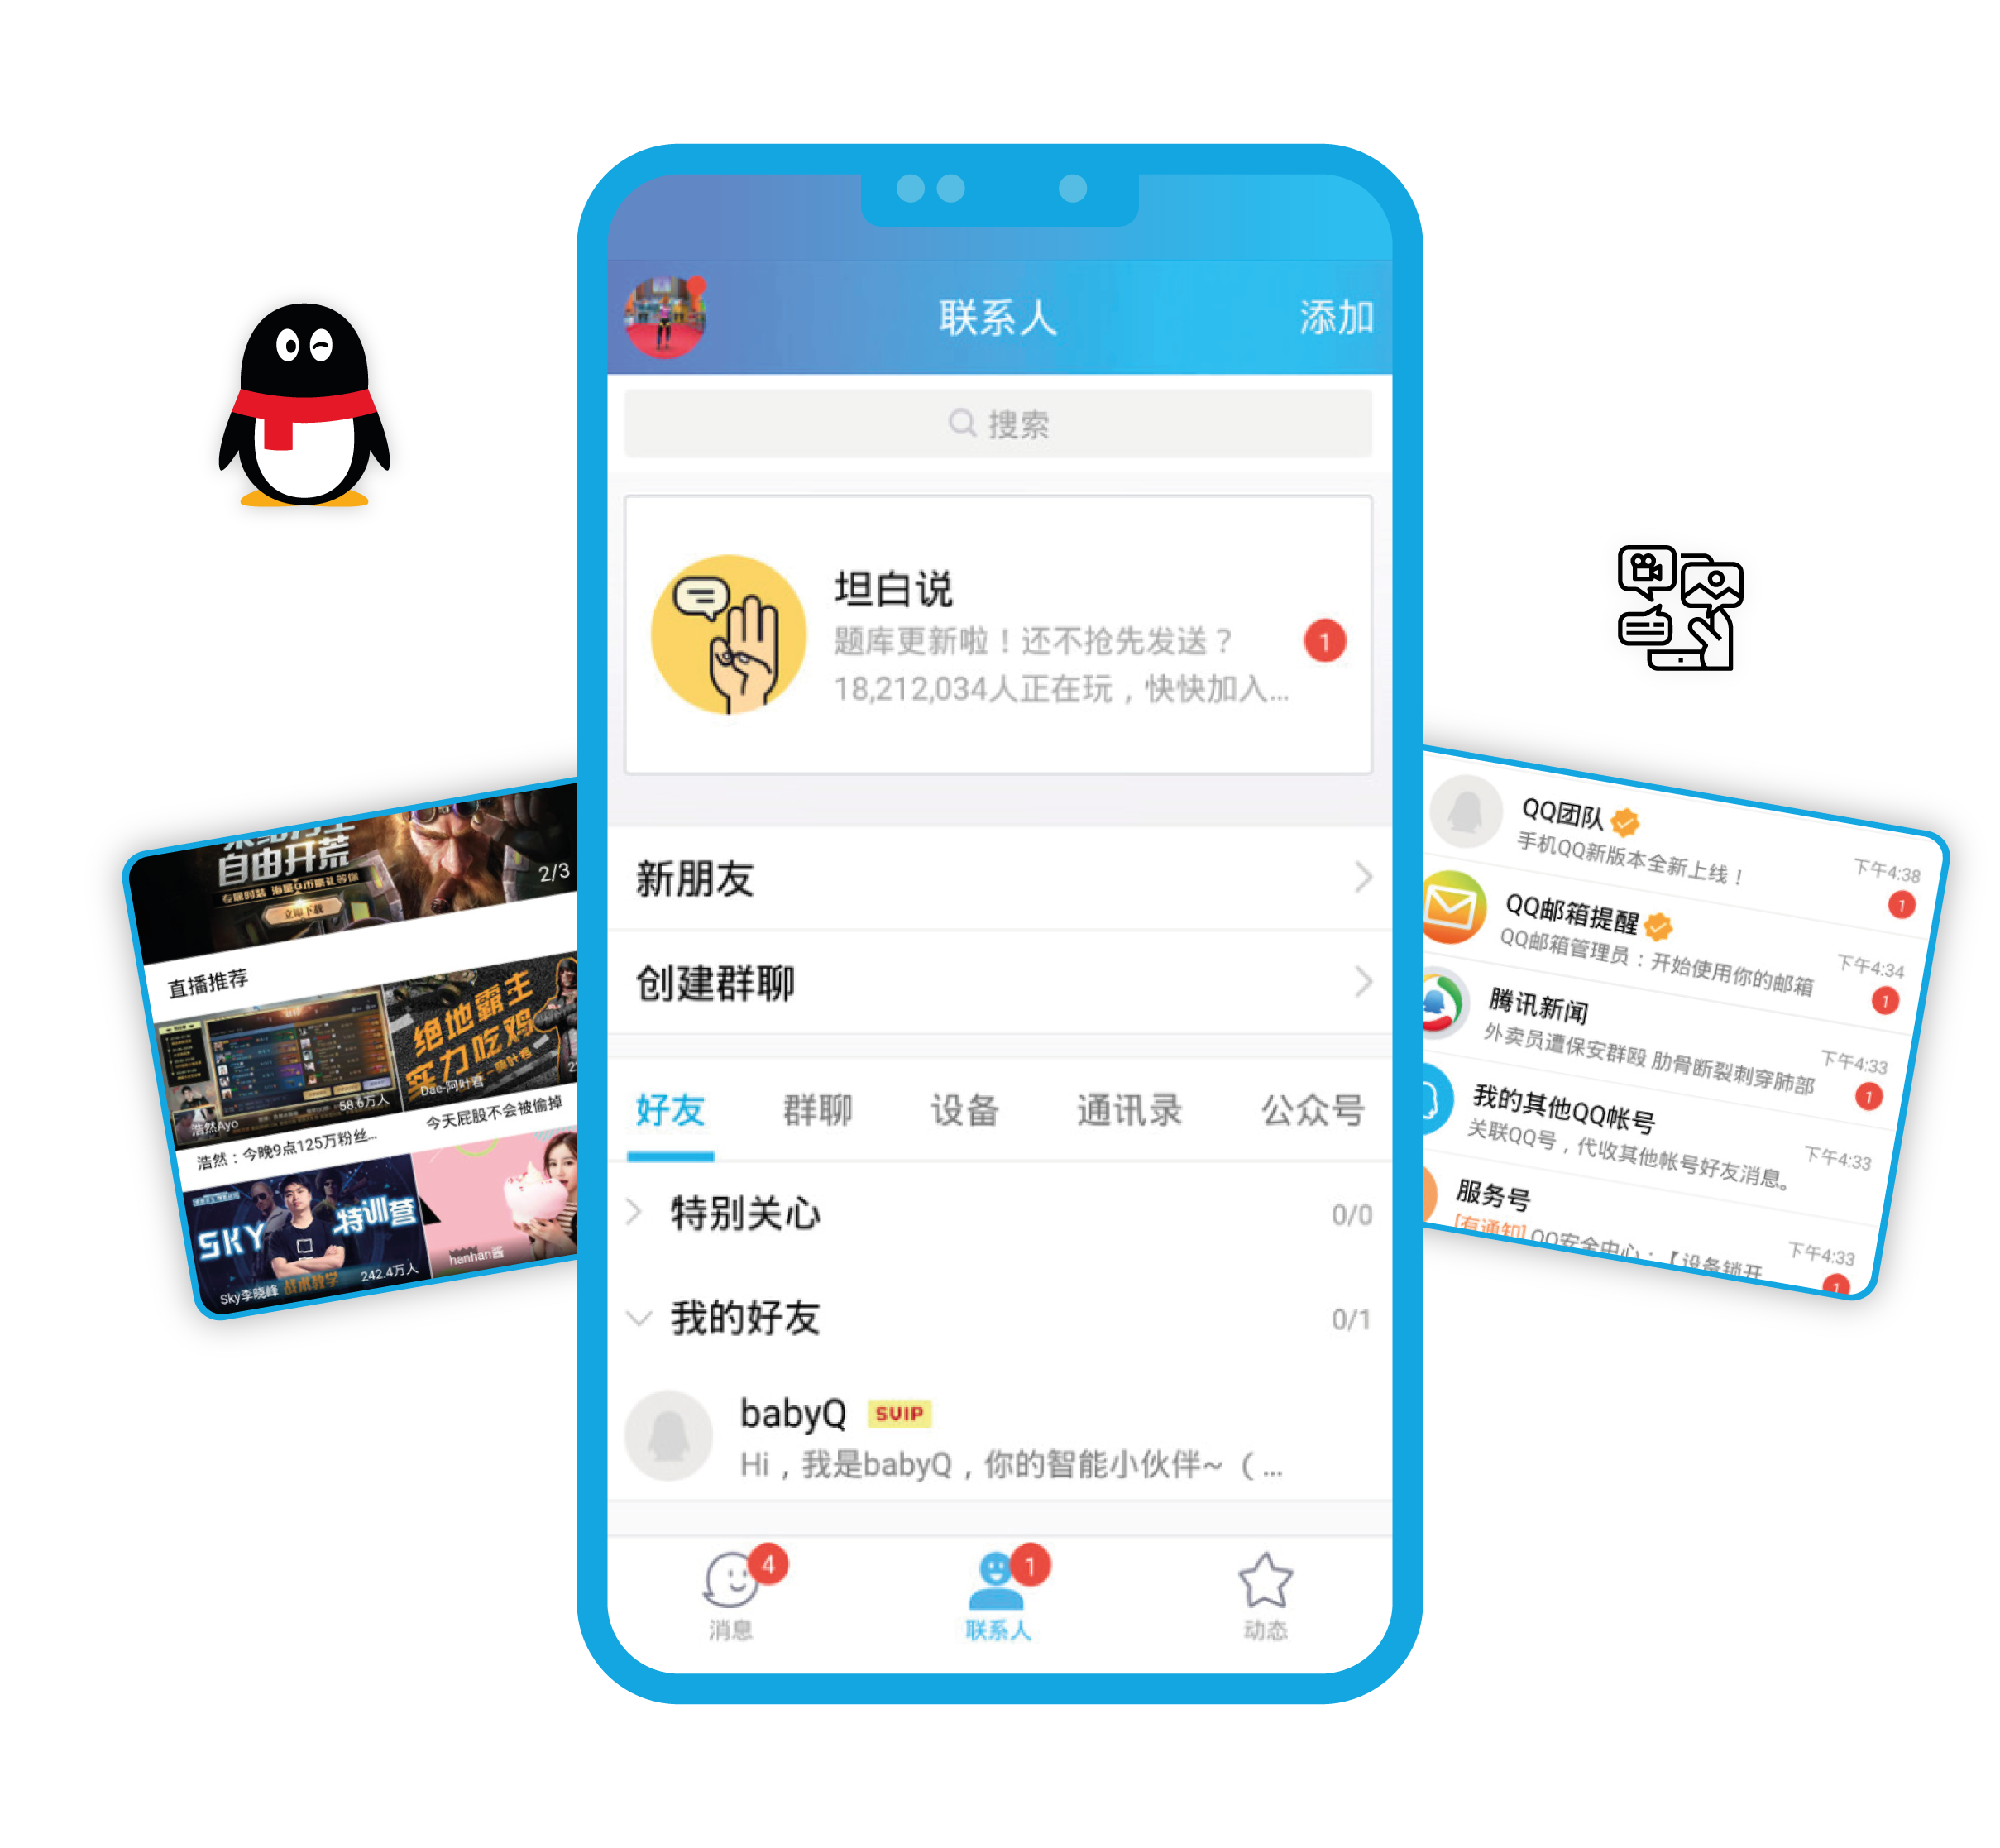 Scrape-Data-from-the-Tencent-QQ-Social-Media-Platform